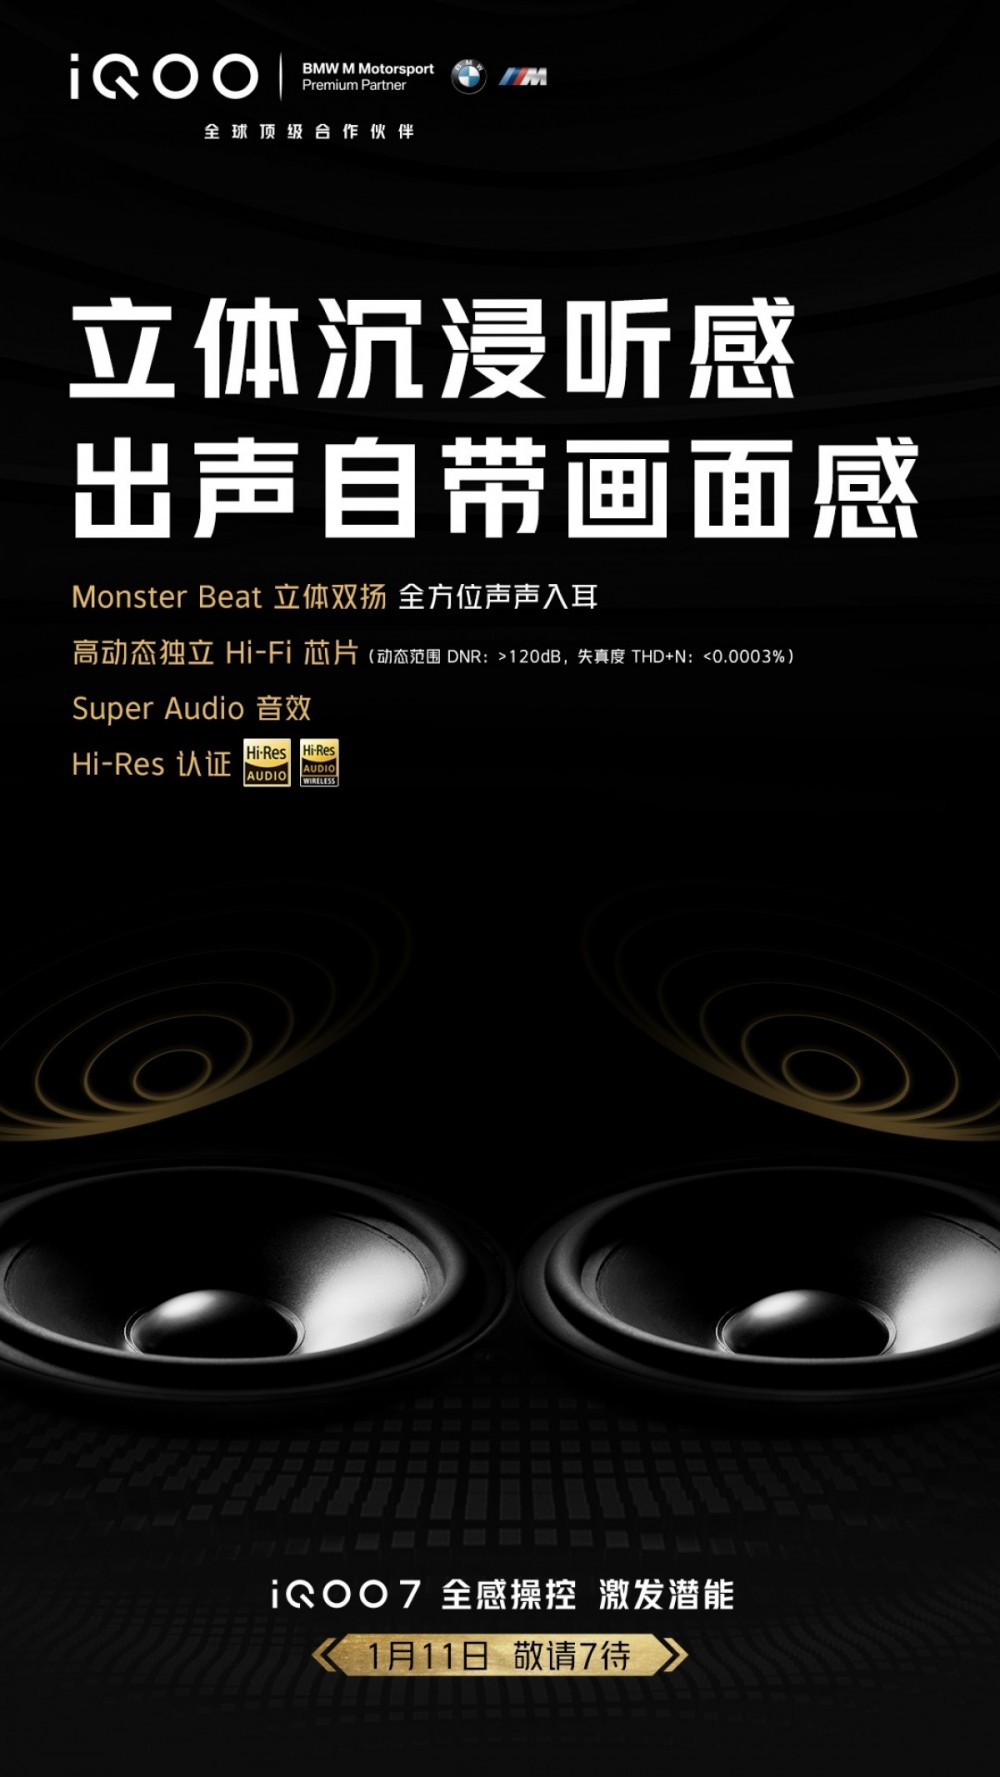 Six vivo iQOO phones start receiving Origin OS beta, iQOO 7 to have Monster Beat speakers